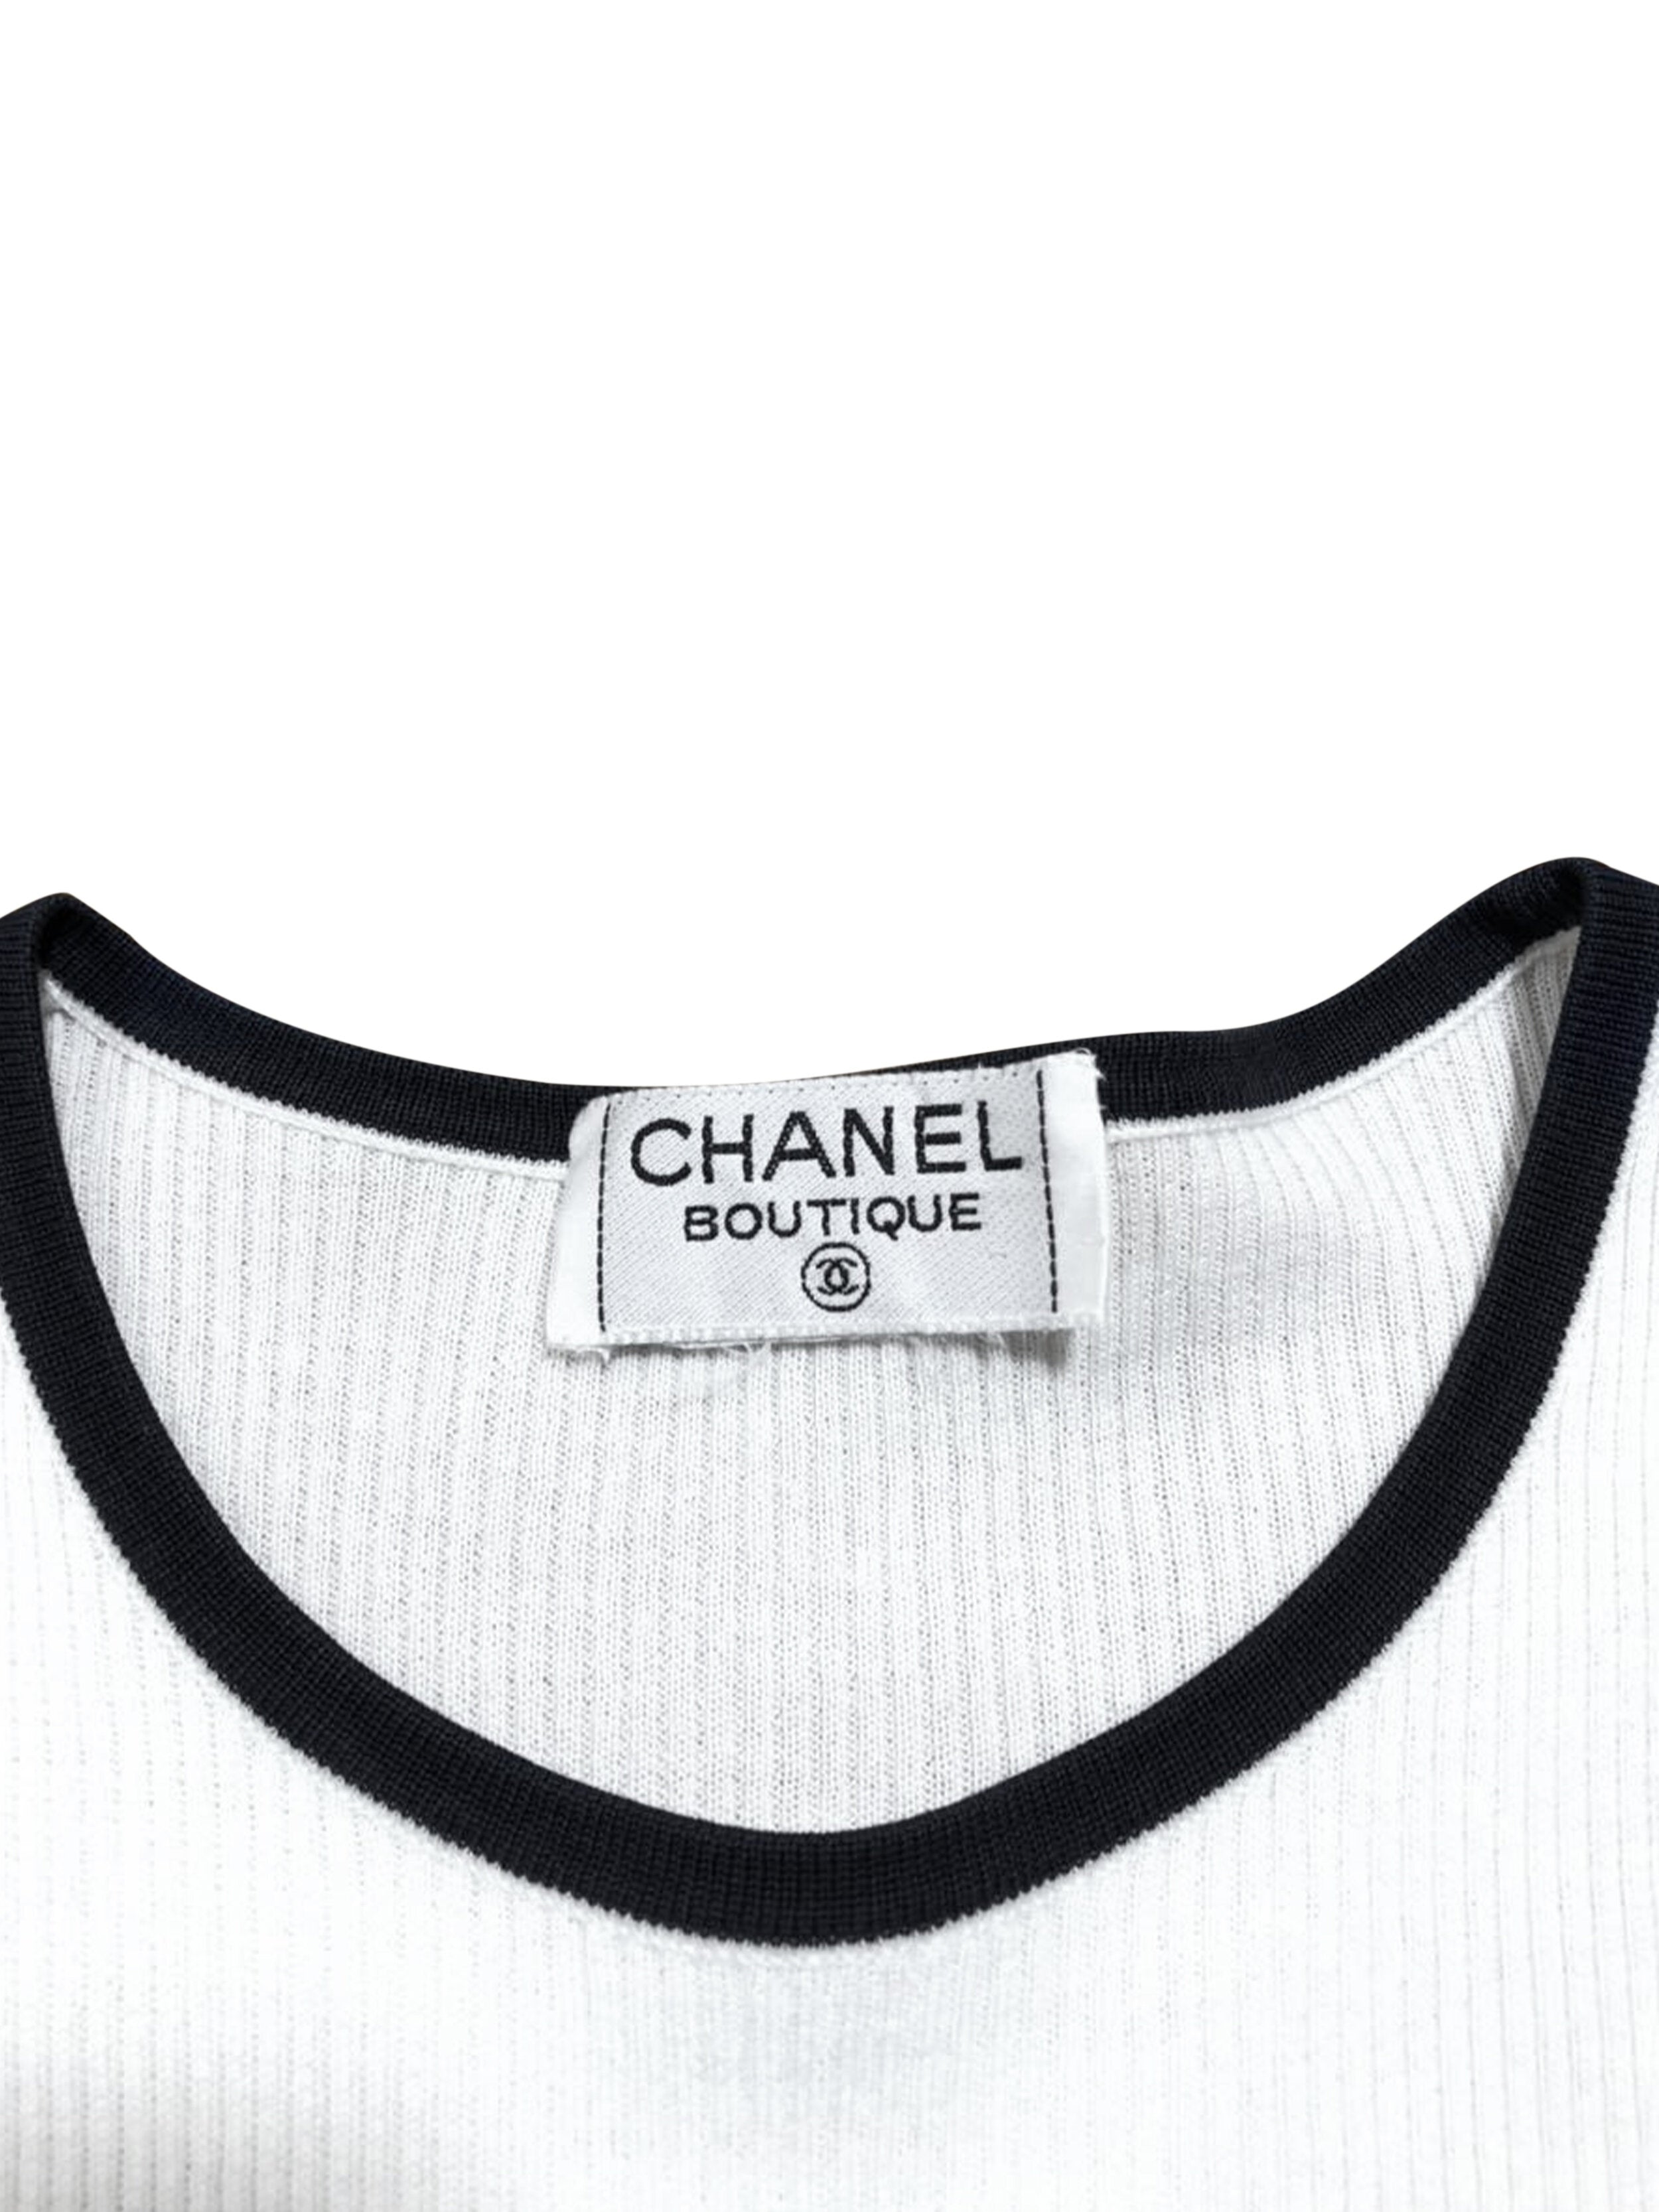 Chanel Sleeveless Metallic Knit Top